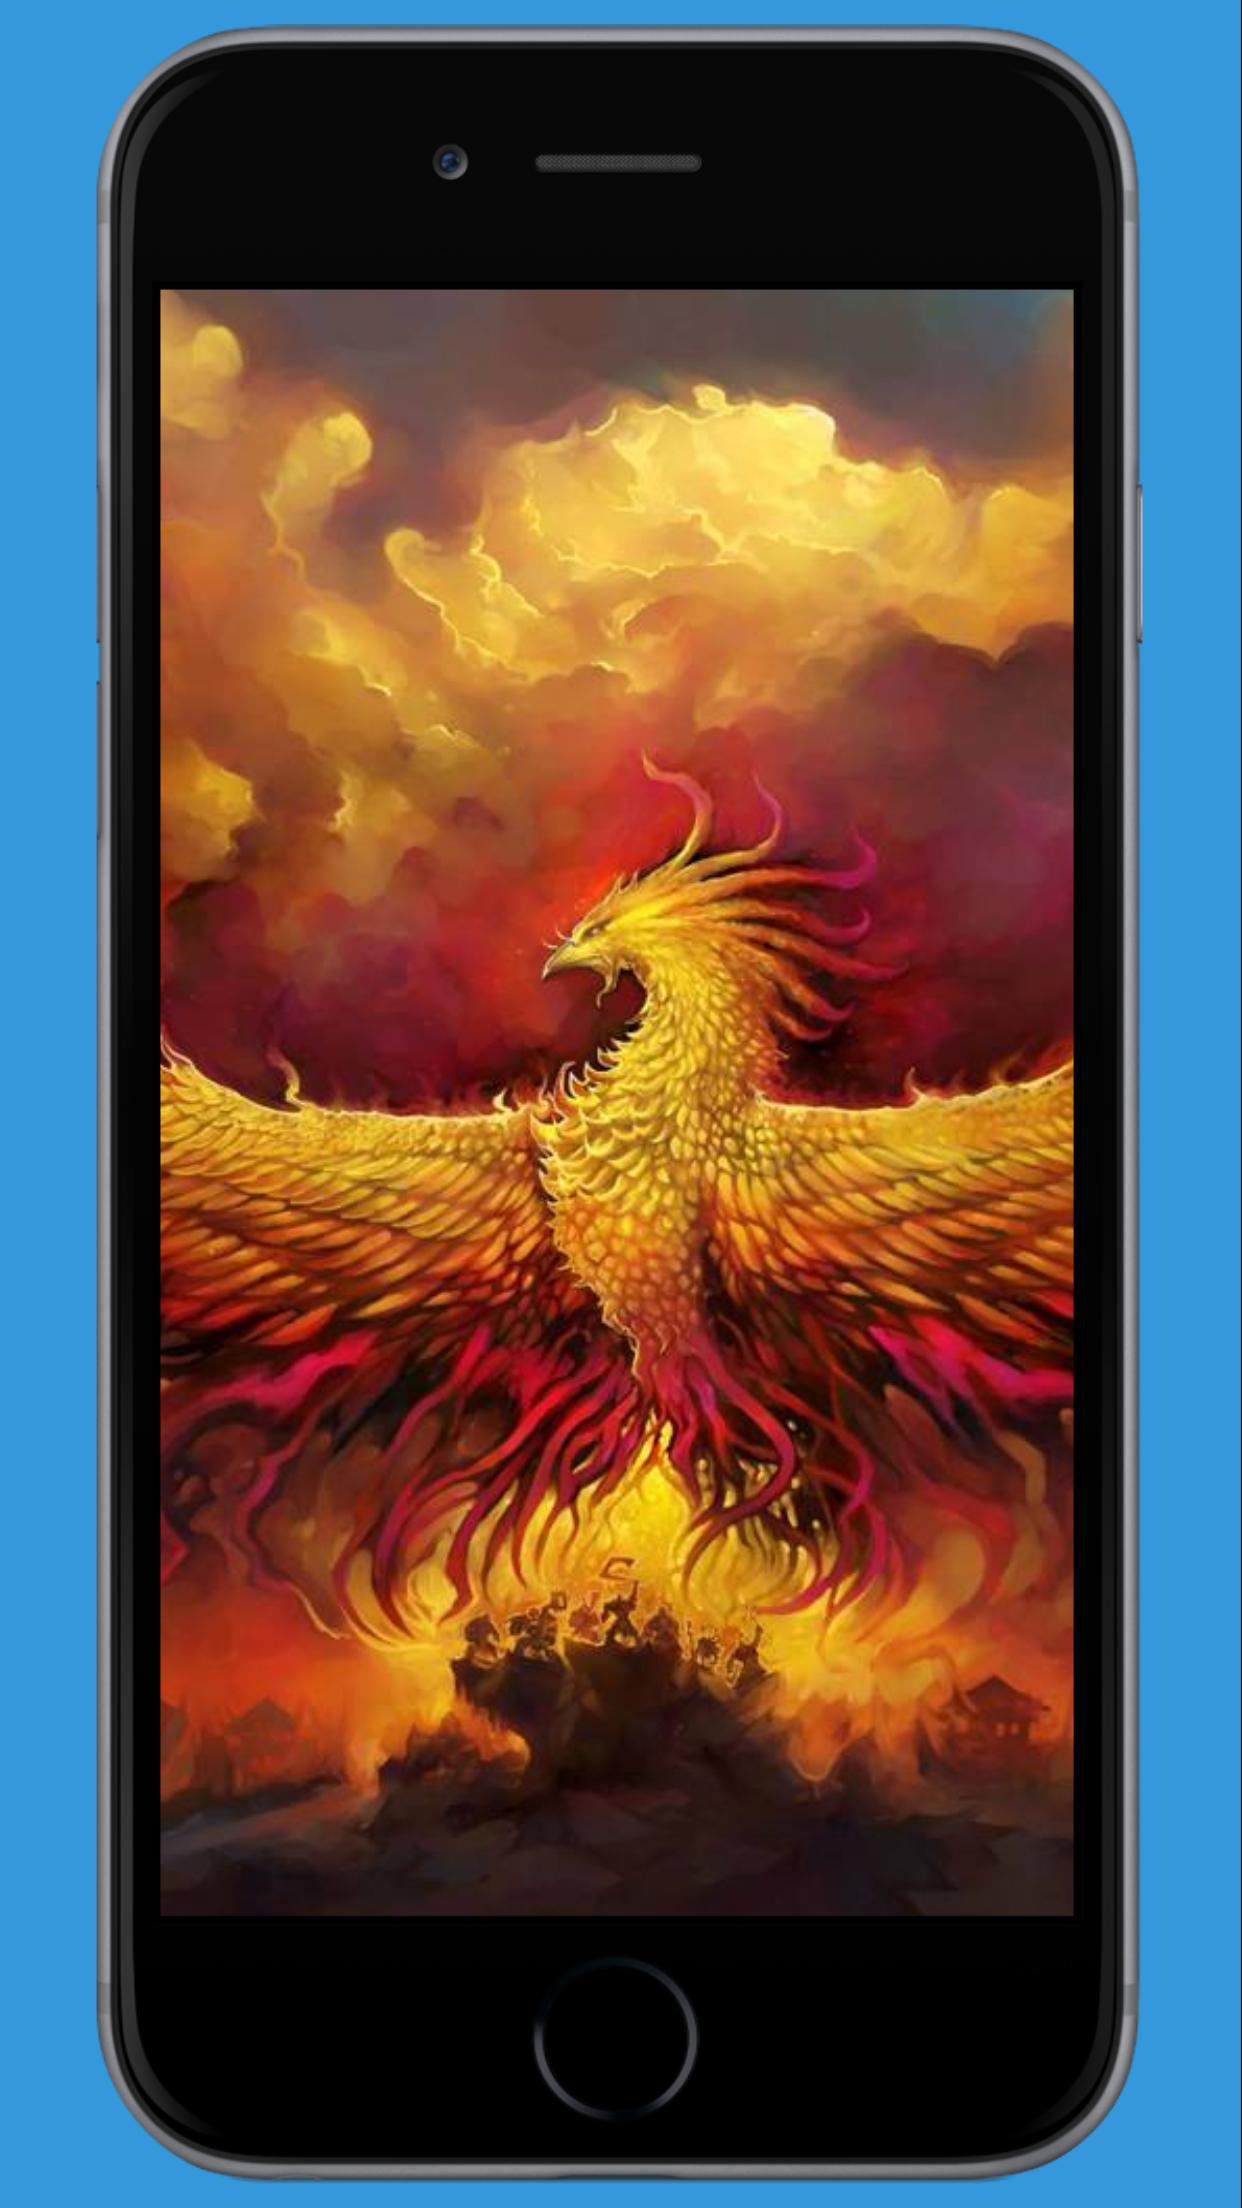 phoenix bird wallpaper APK for Android Download